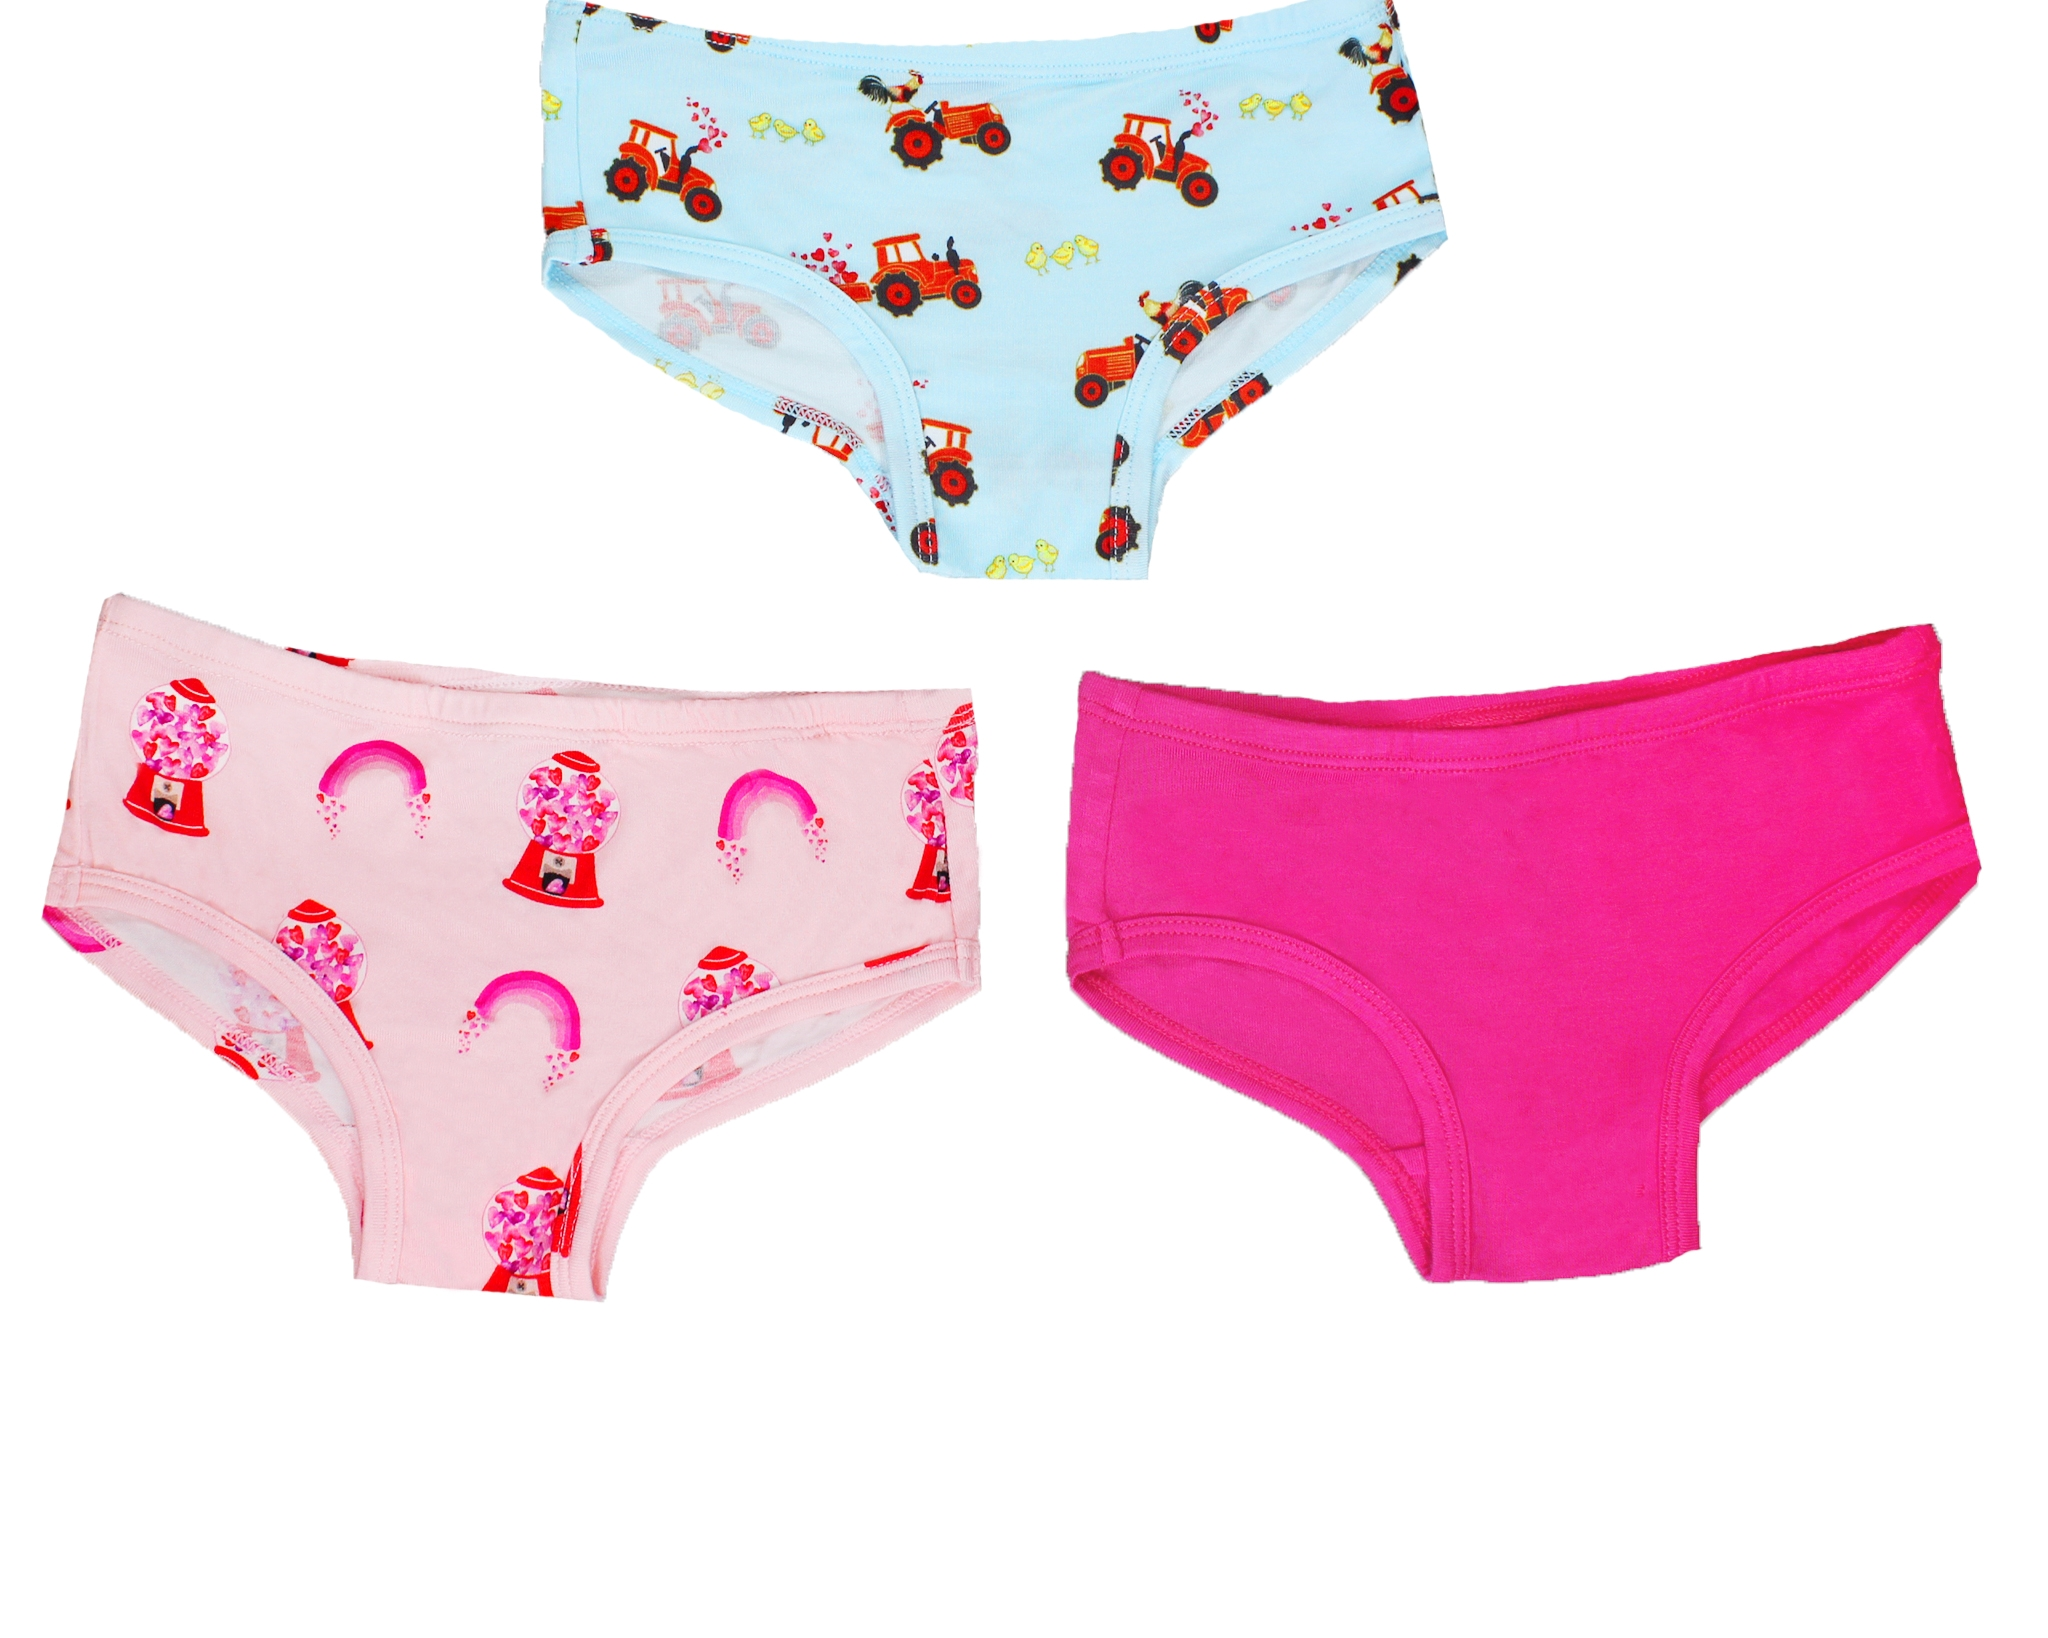 Nakusu 12Pieces On Sale Kid's/Girl's Underwear Panty Promo Free Size 1-3yrs